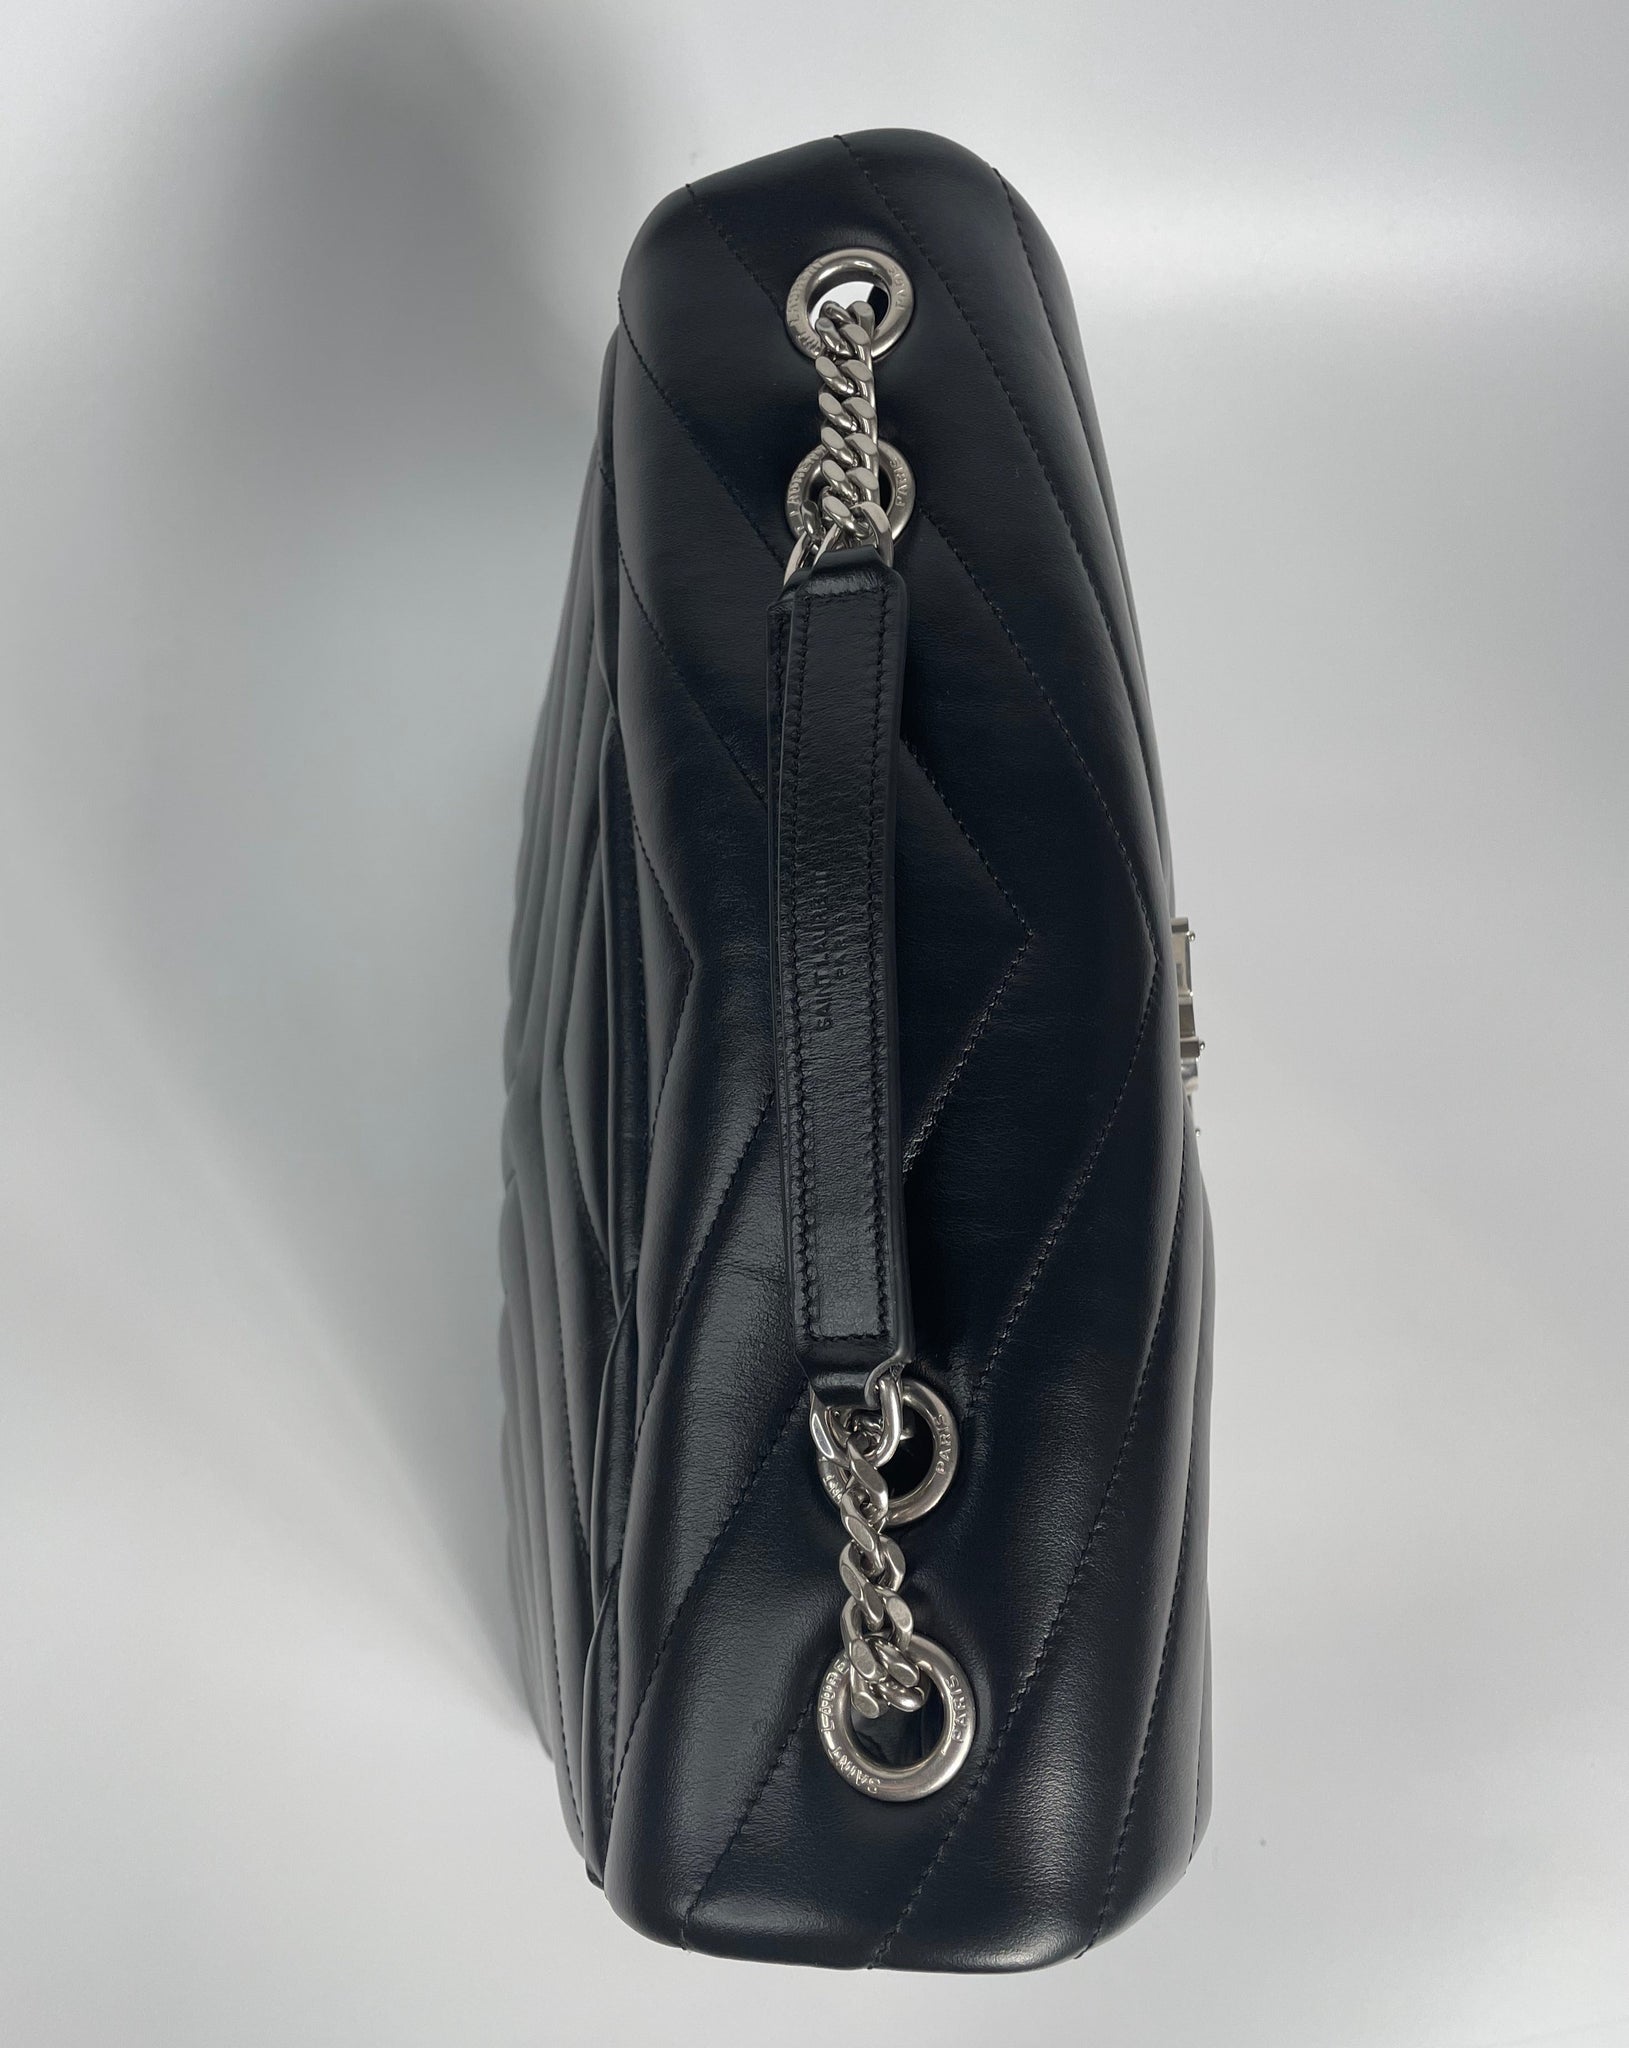 Loulou leather handbag Saint Laurent Black in Leather - 37445217